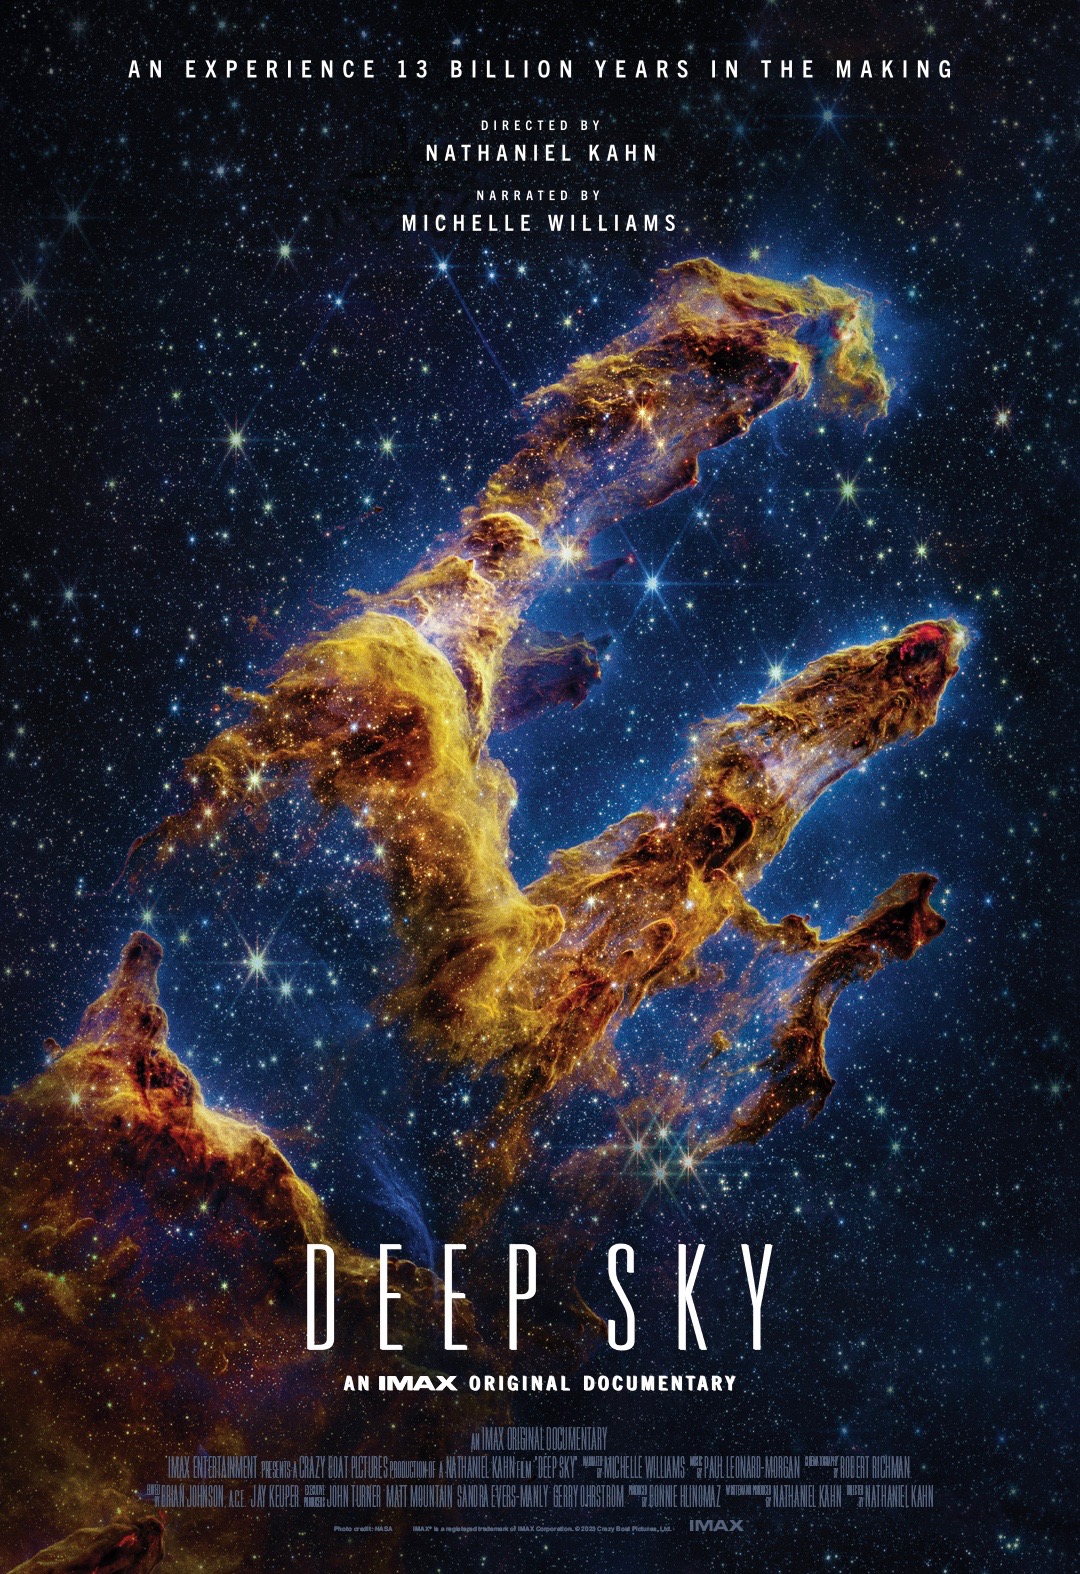 Deep Sky cover art